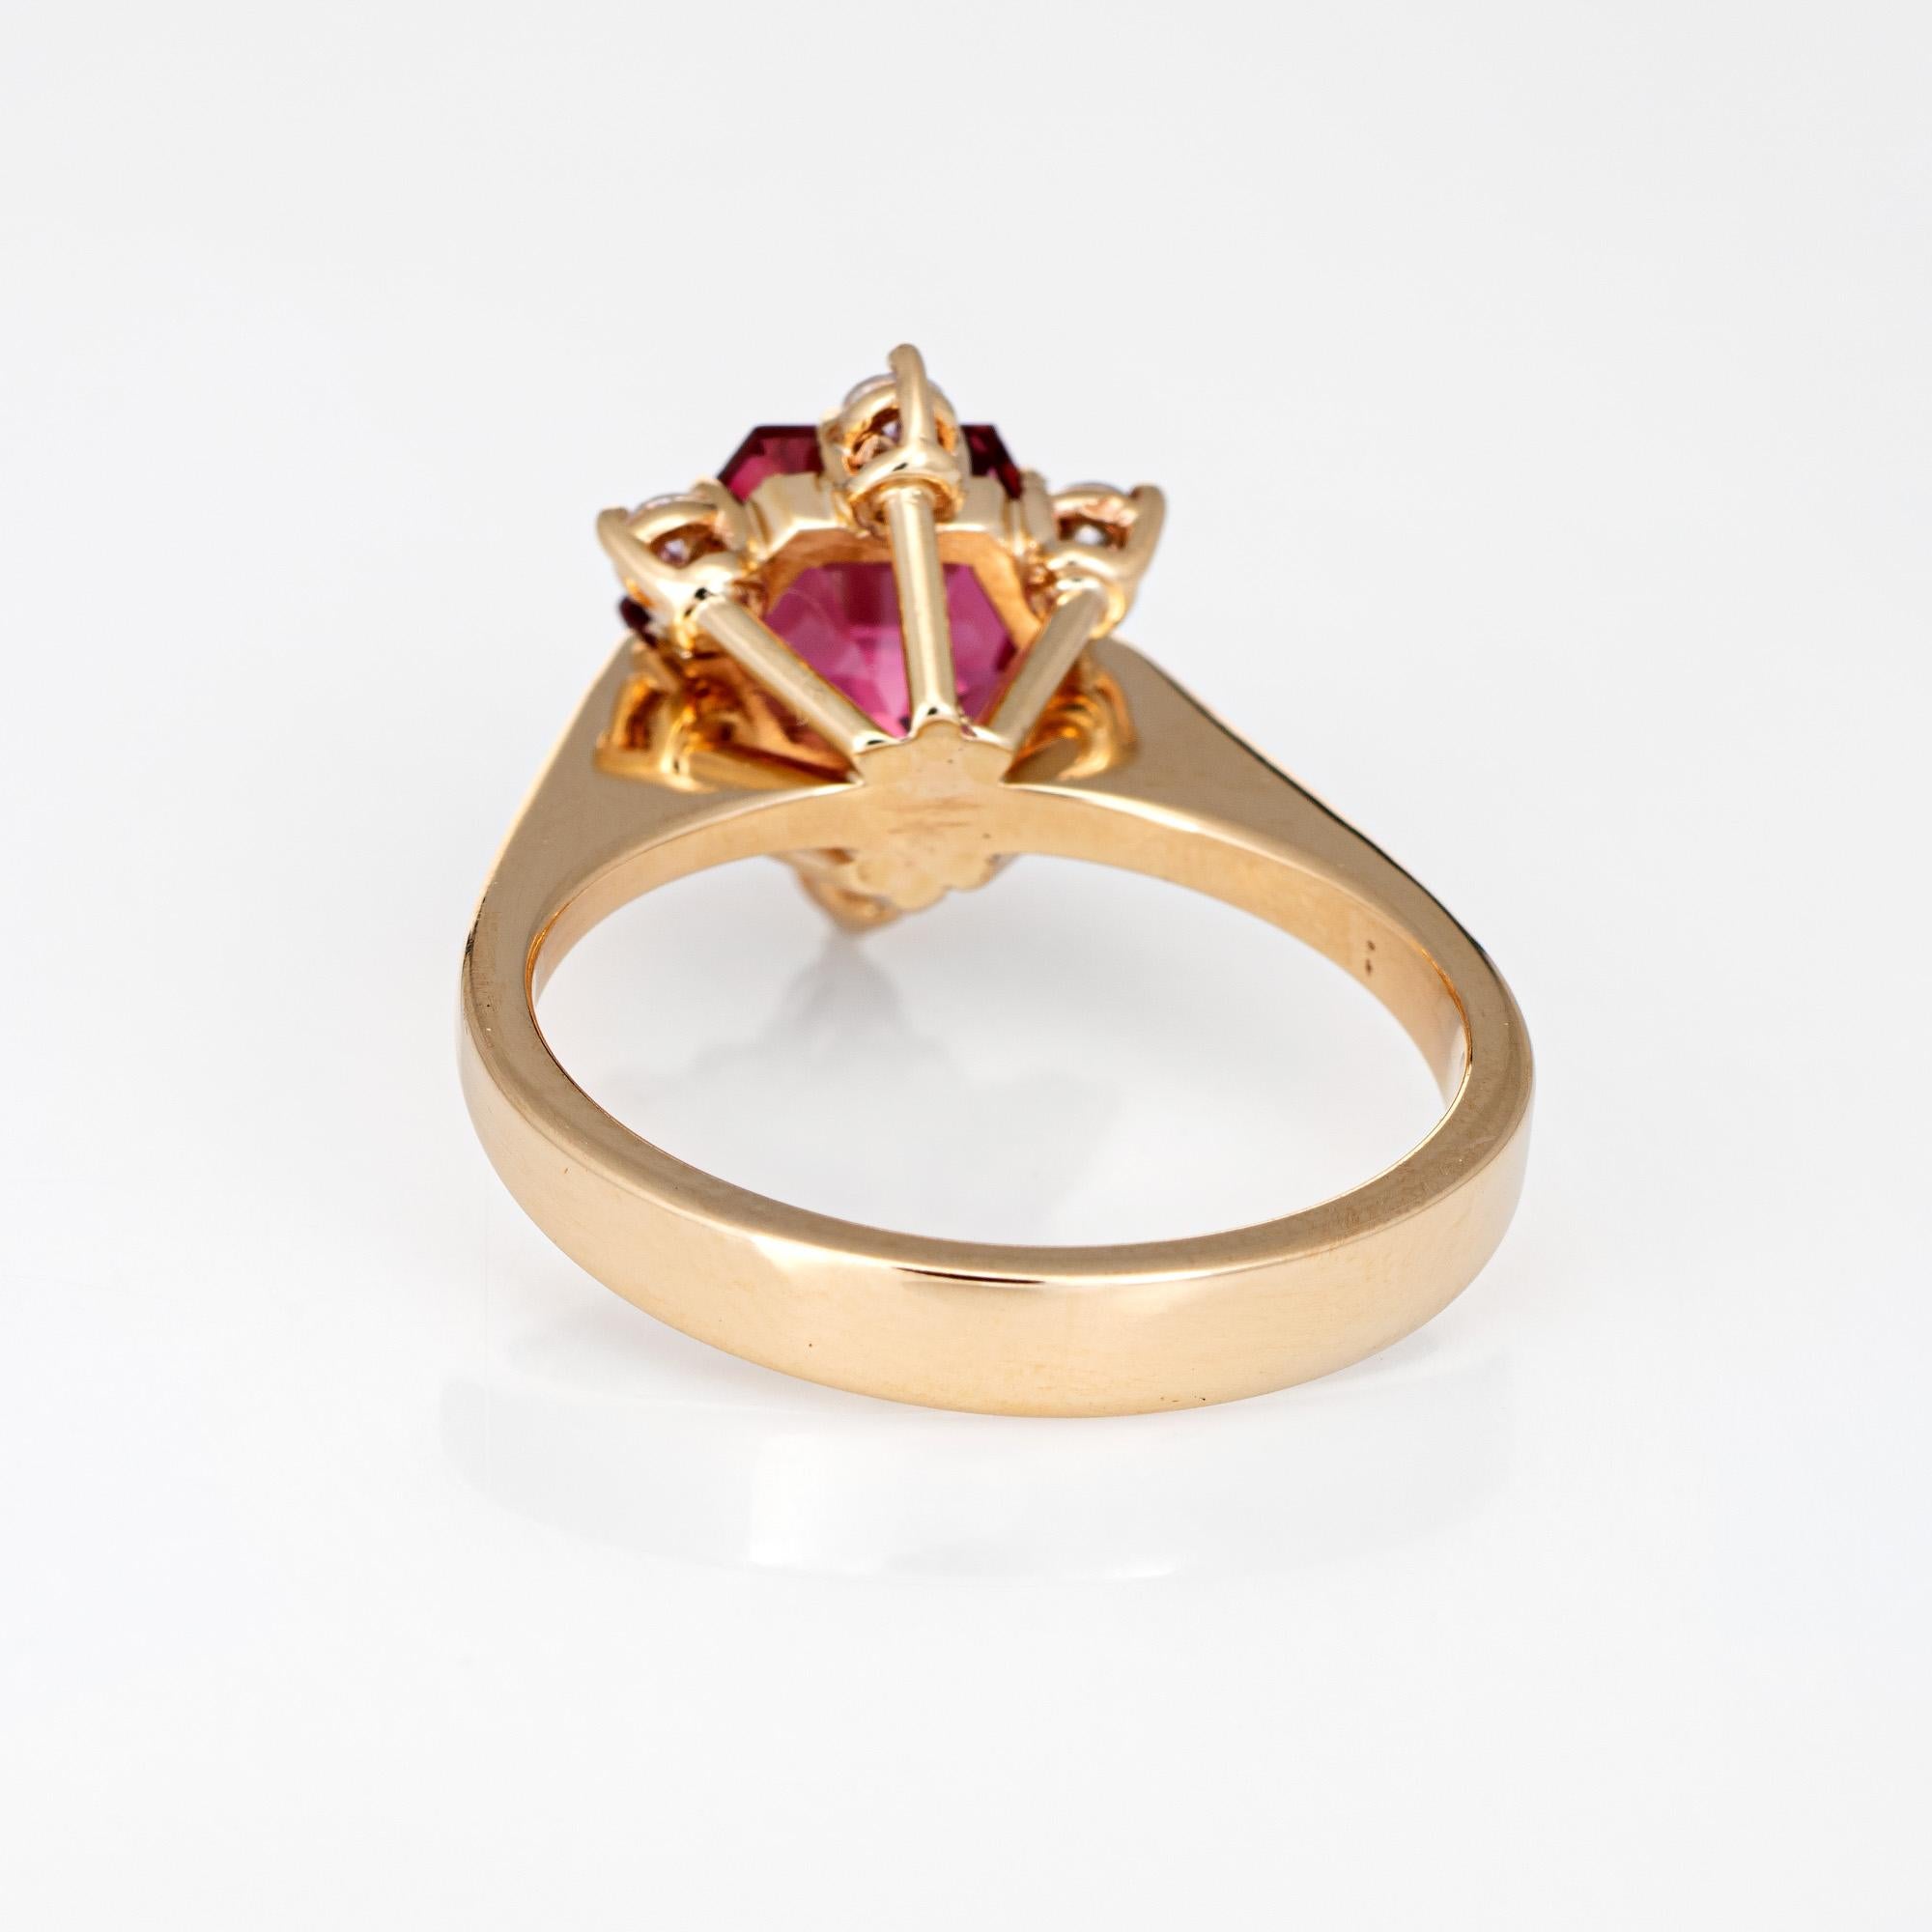 Hexagon Cut Hexagonal Pink Tourmaline Diamond Ring Vintage 18 Karat Gold Estate Jewelry